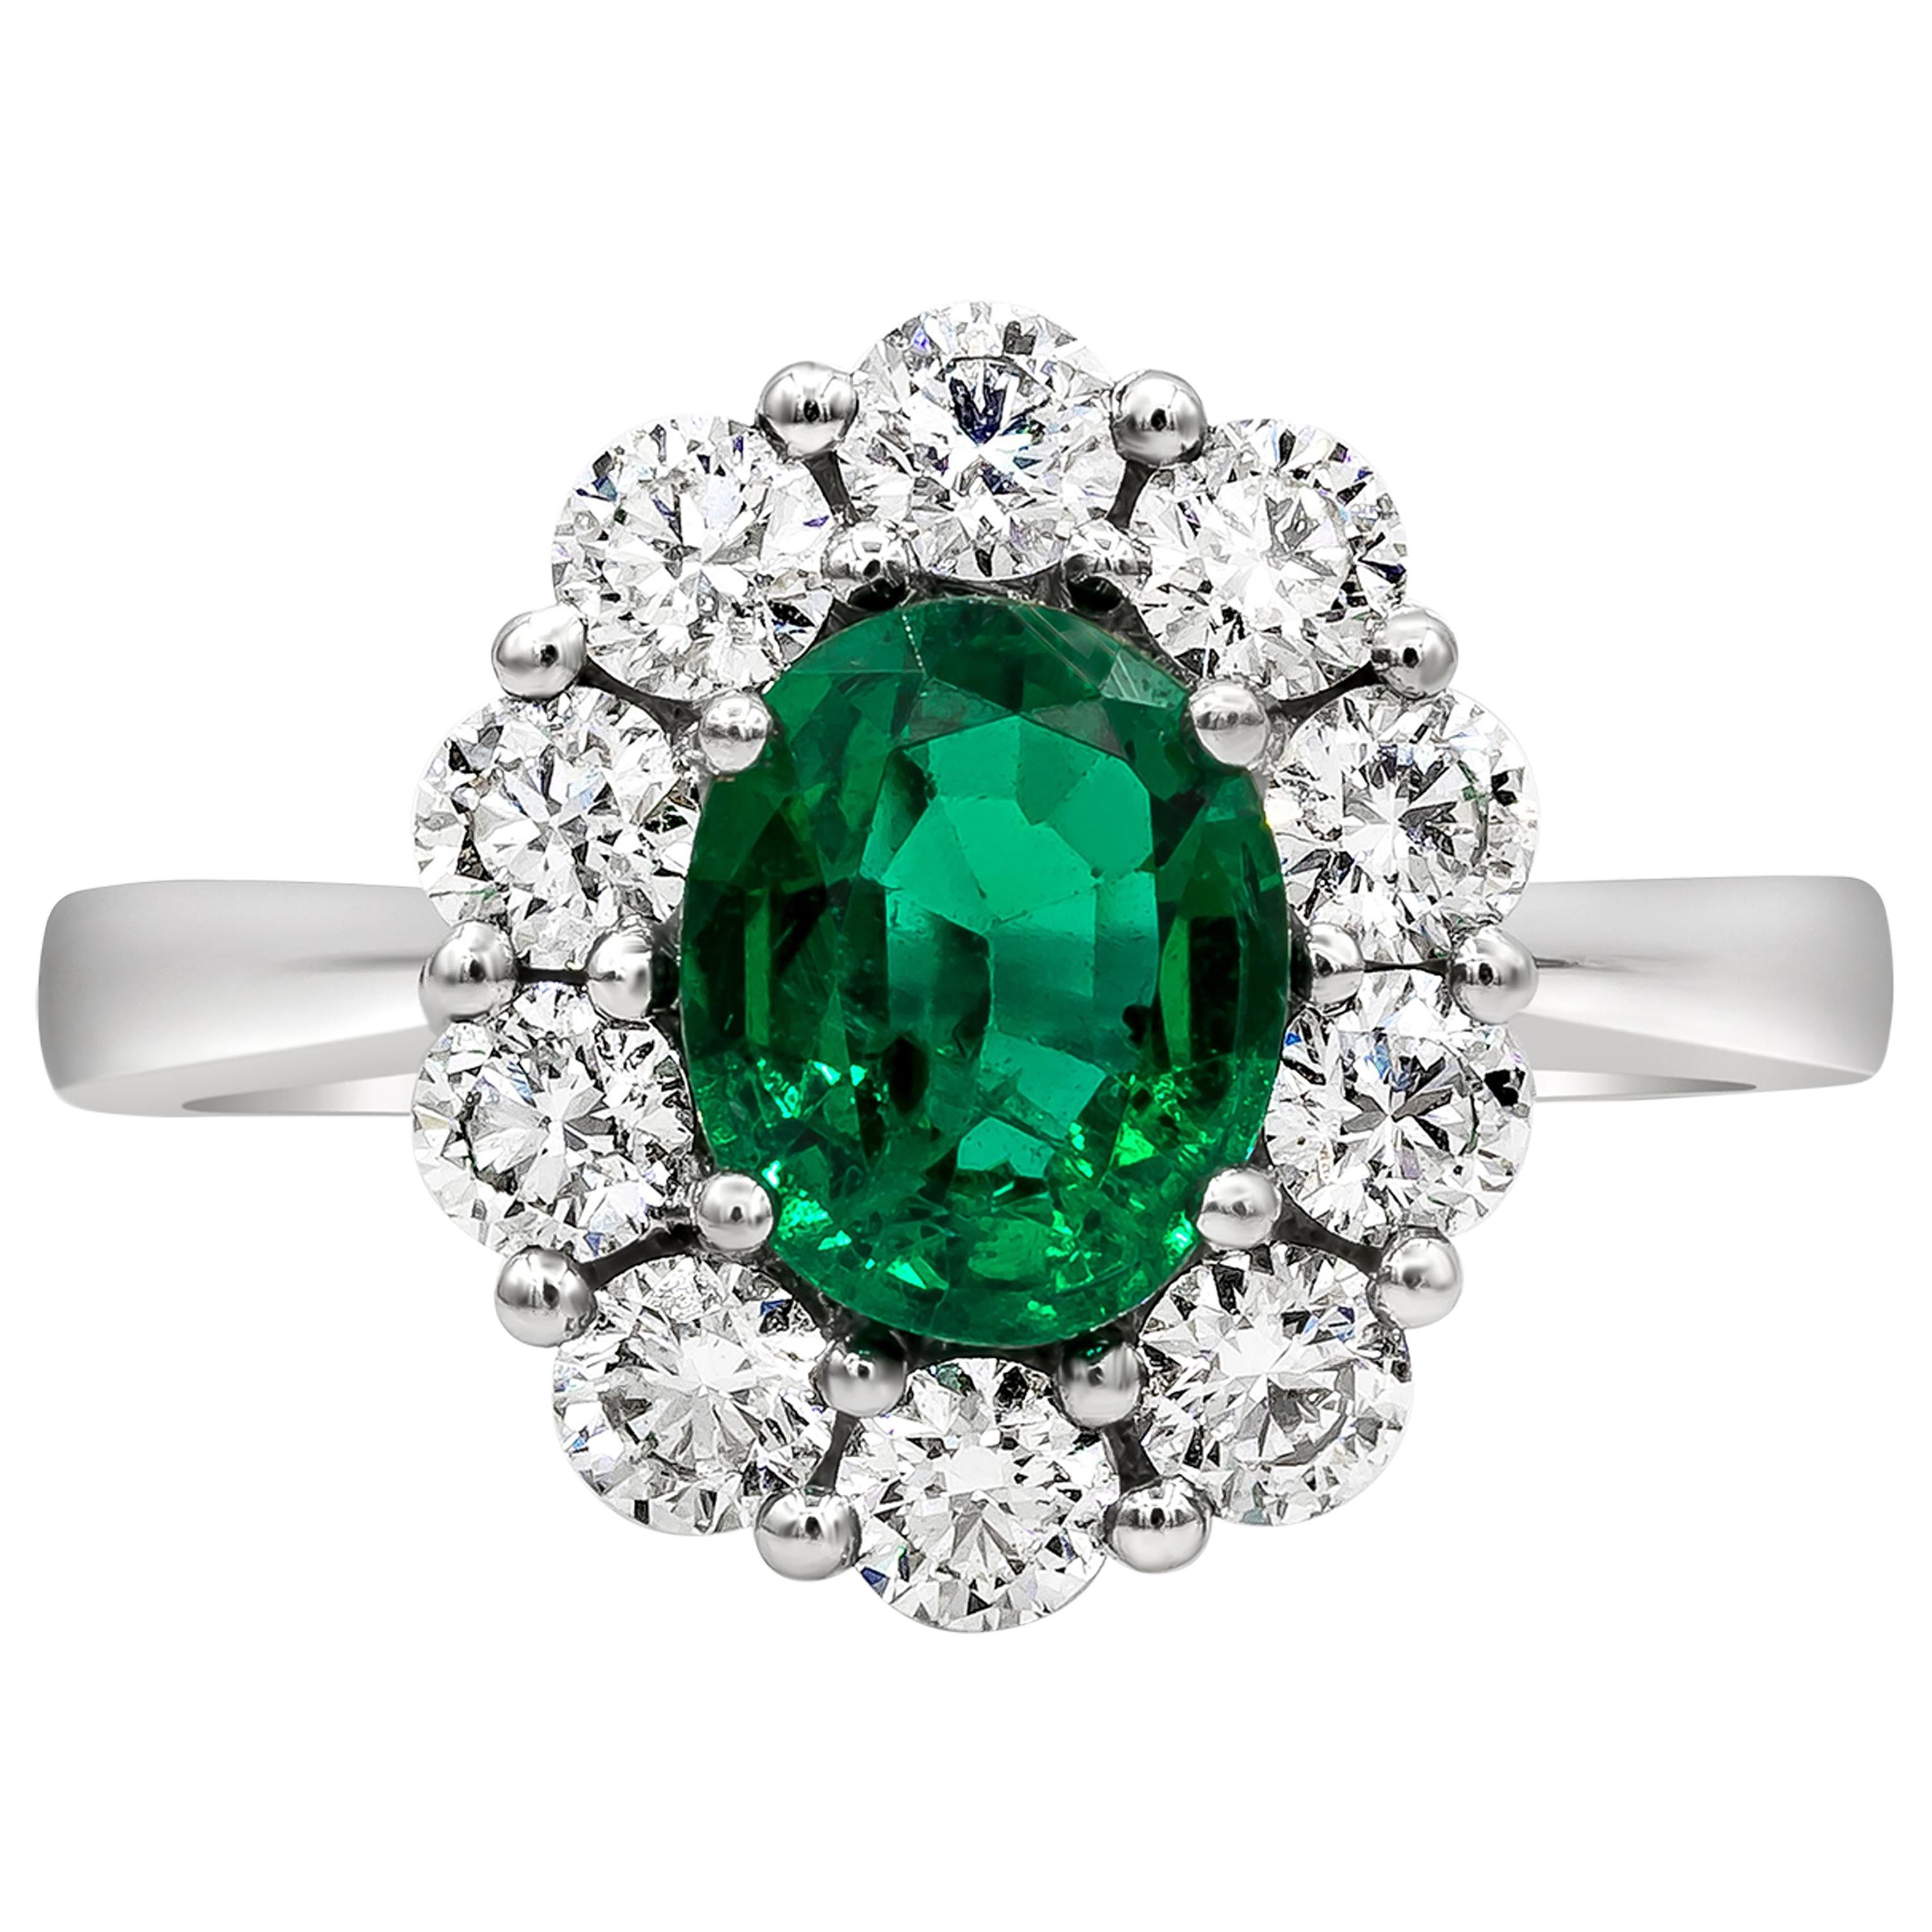 Roman Malakov Verlobungsring mit 1.12 Karat grünem Smaragd im Ovalschliff und Diamant-Halo